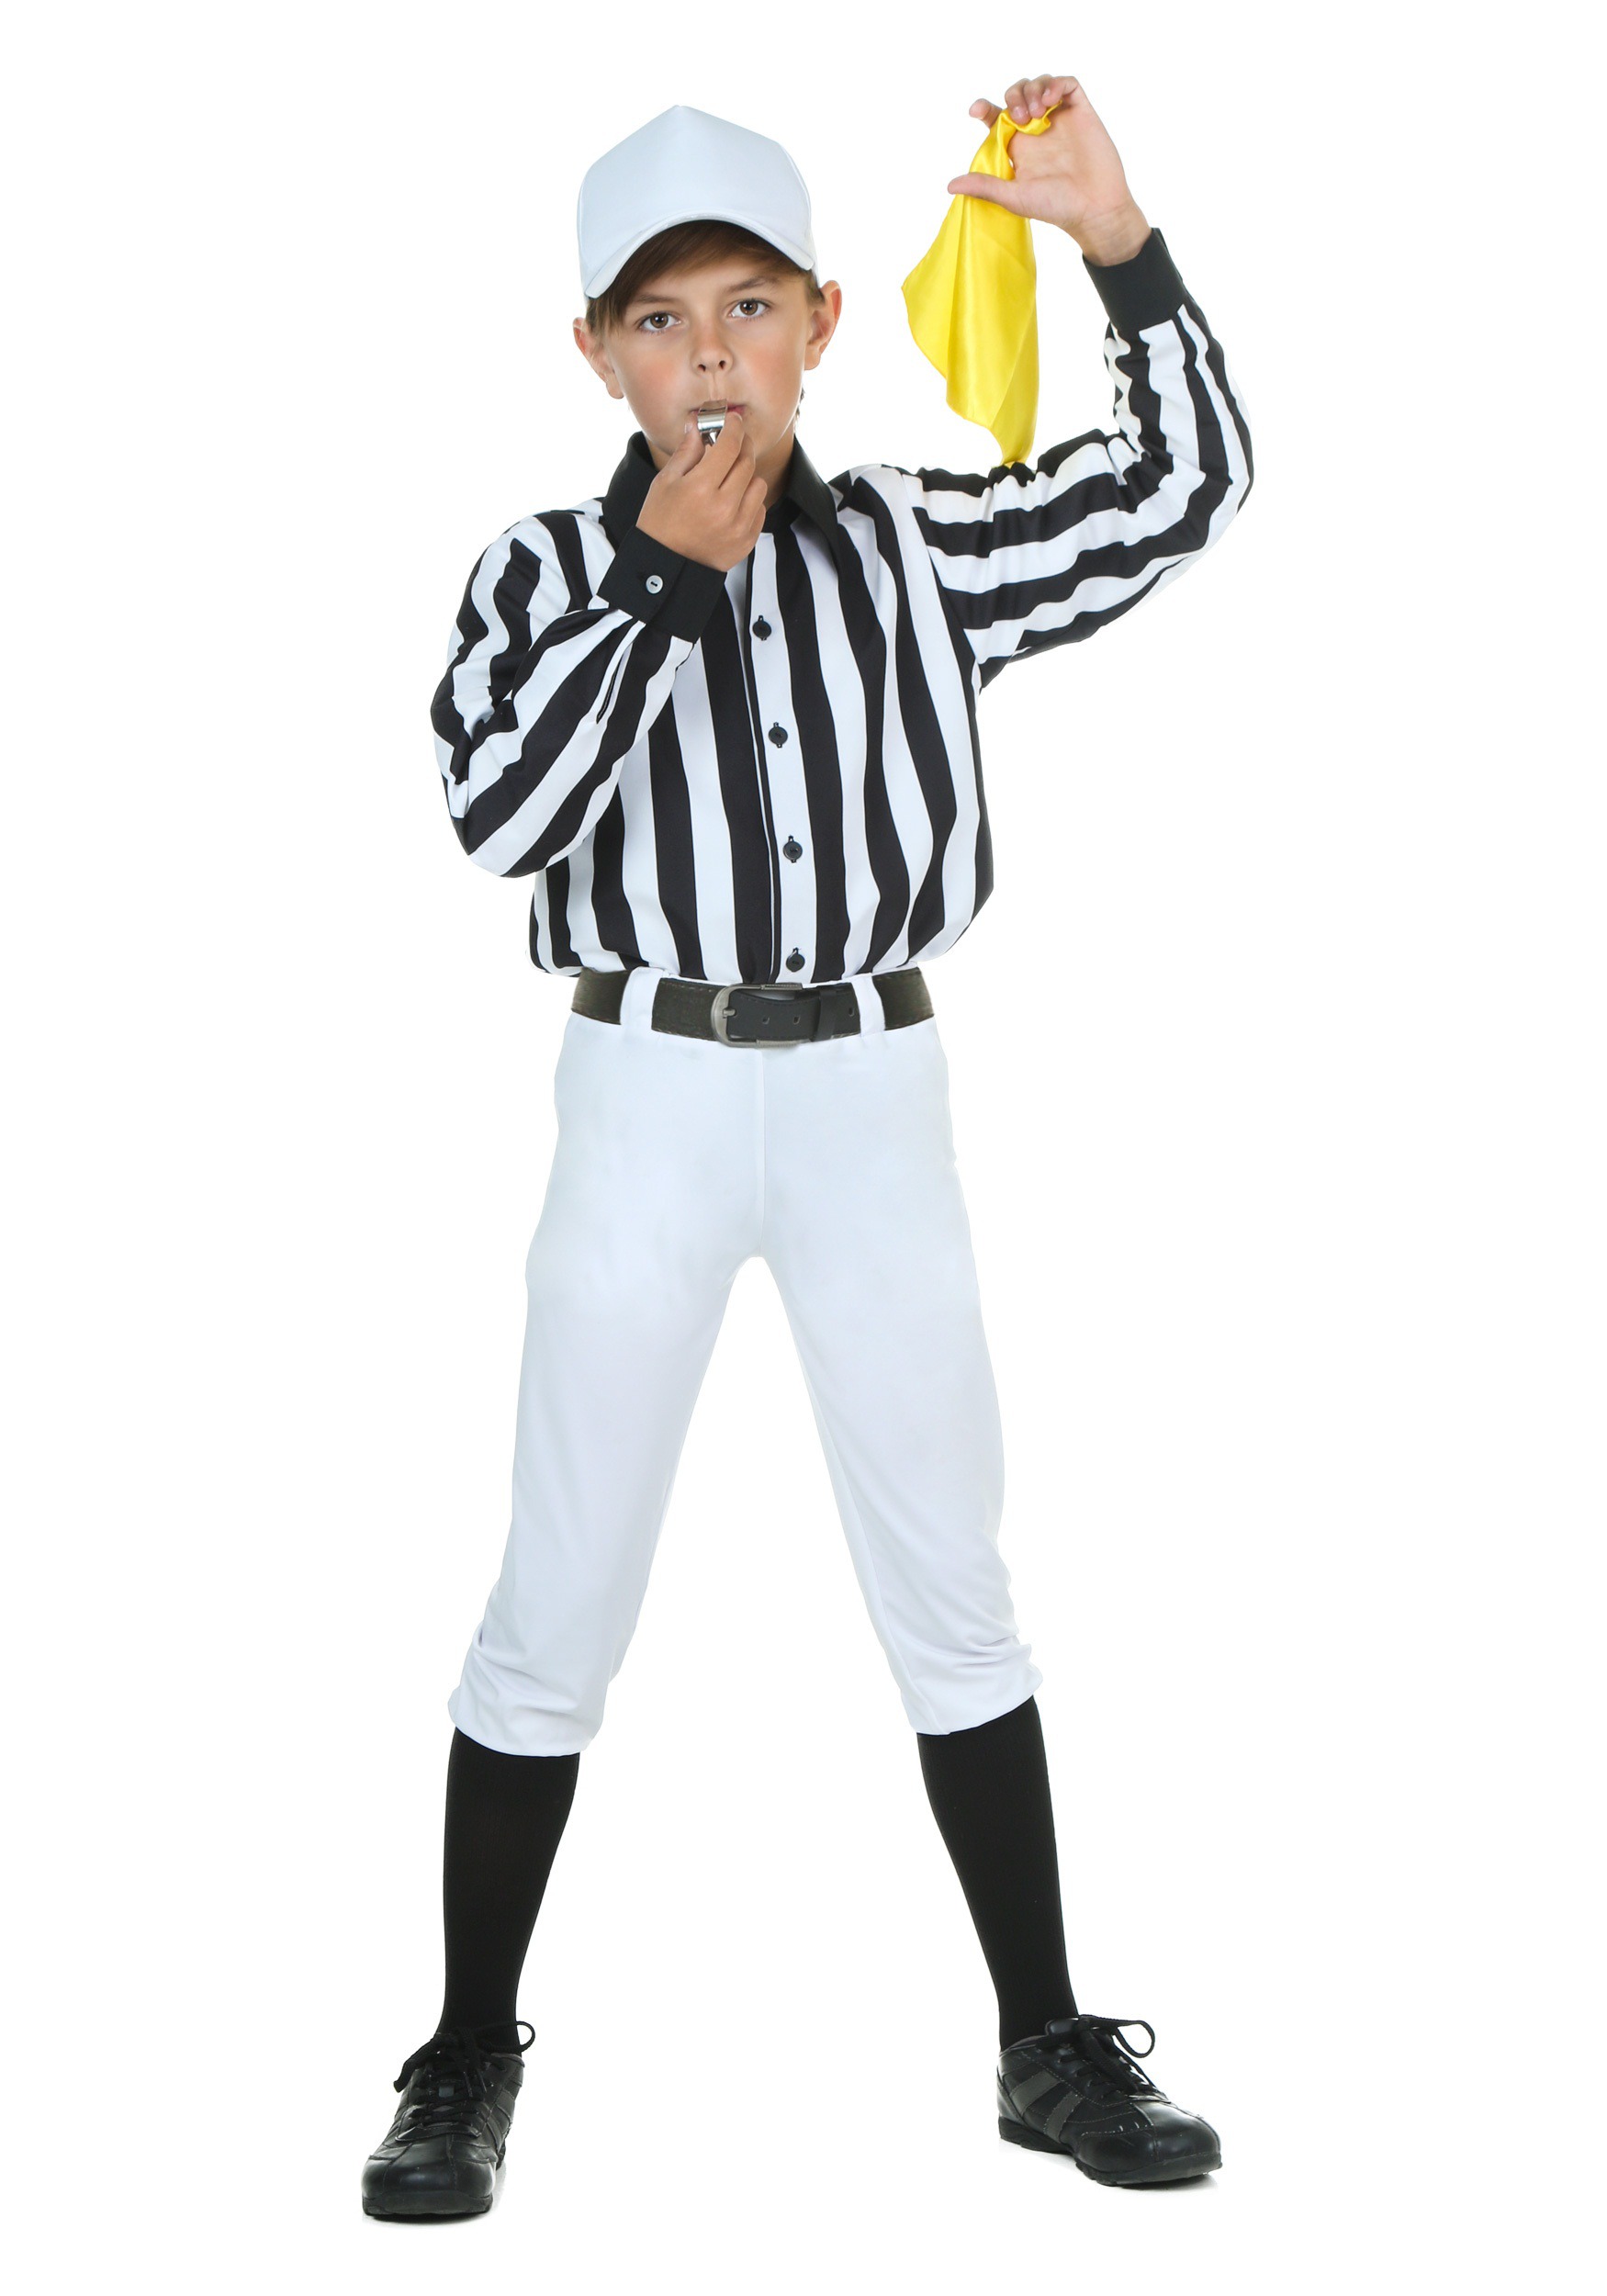 Plus No Rules Referee Sexy Sports Costume